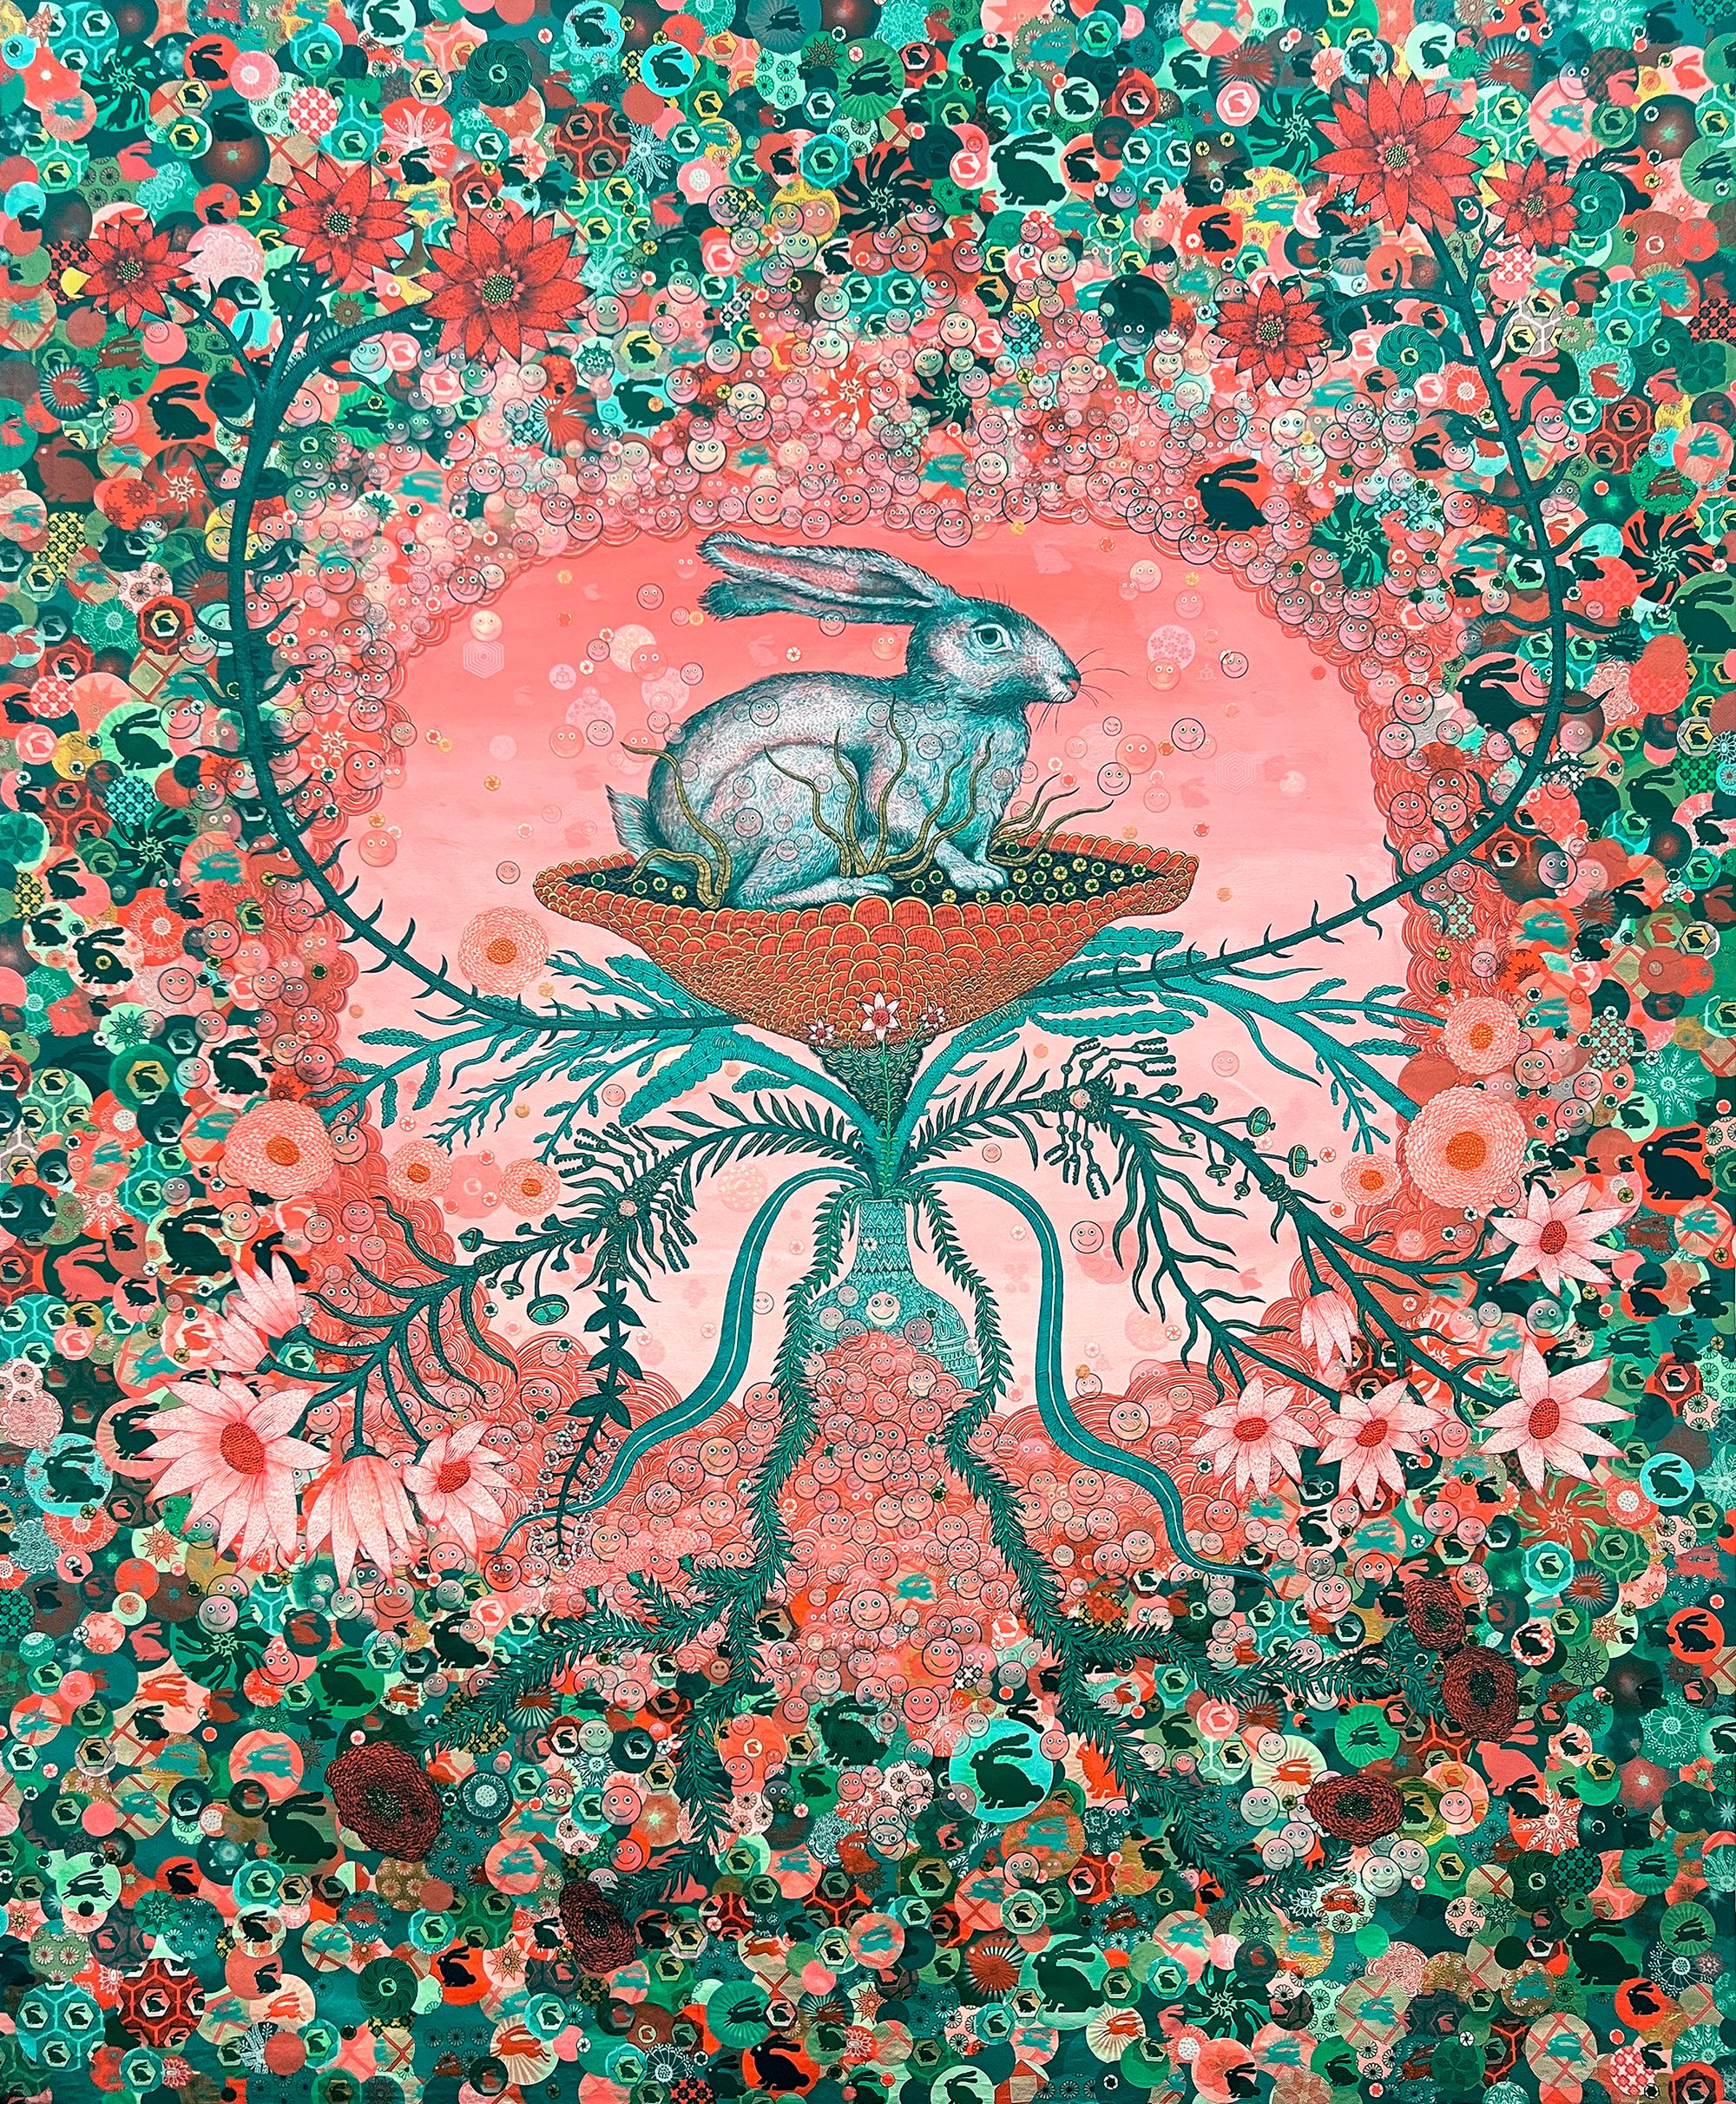 Peter Hamlin Landscape Painting - Rabbit Hole Singularity, Bunny, Flowers, Pink, Teal Surreal Botanical Landscape